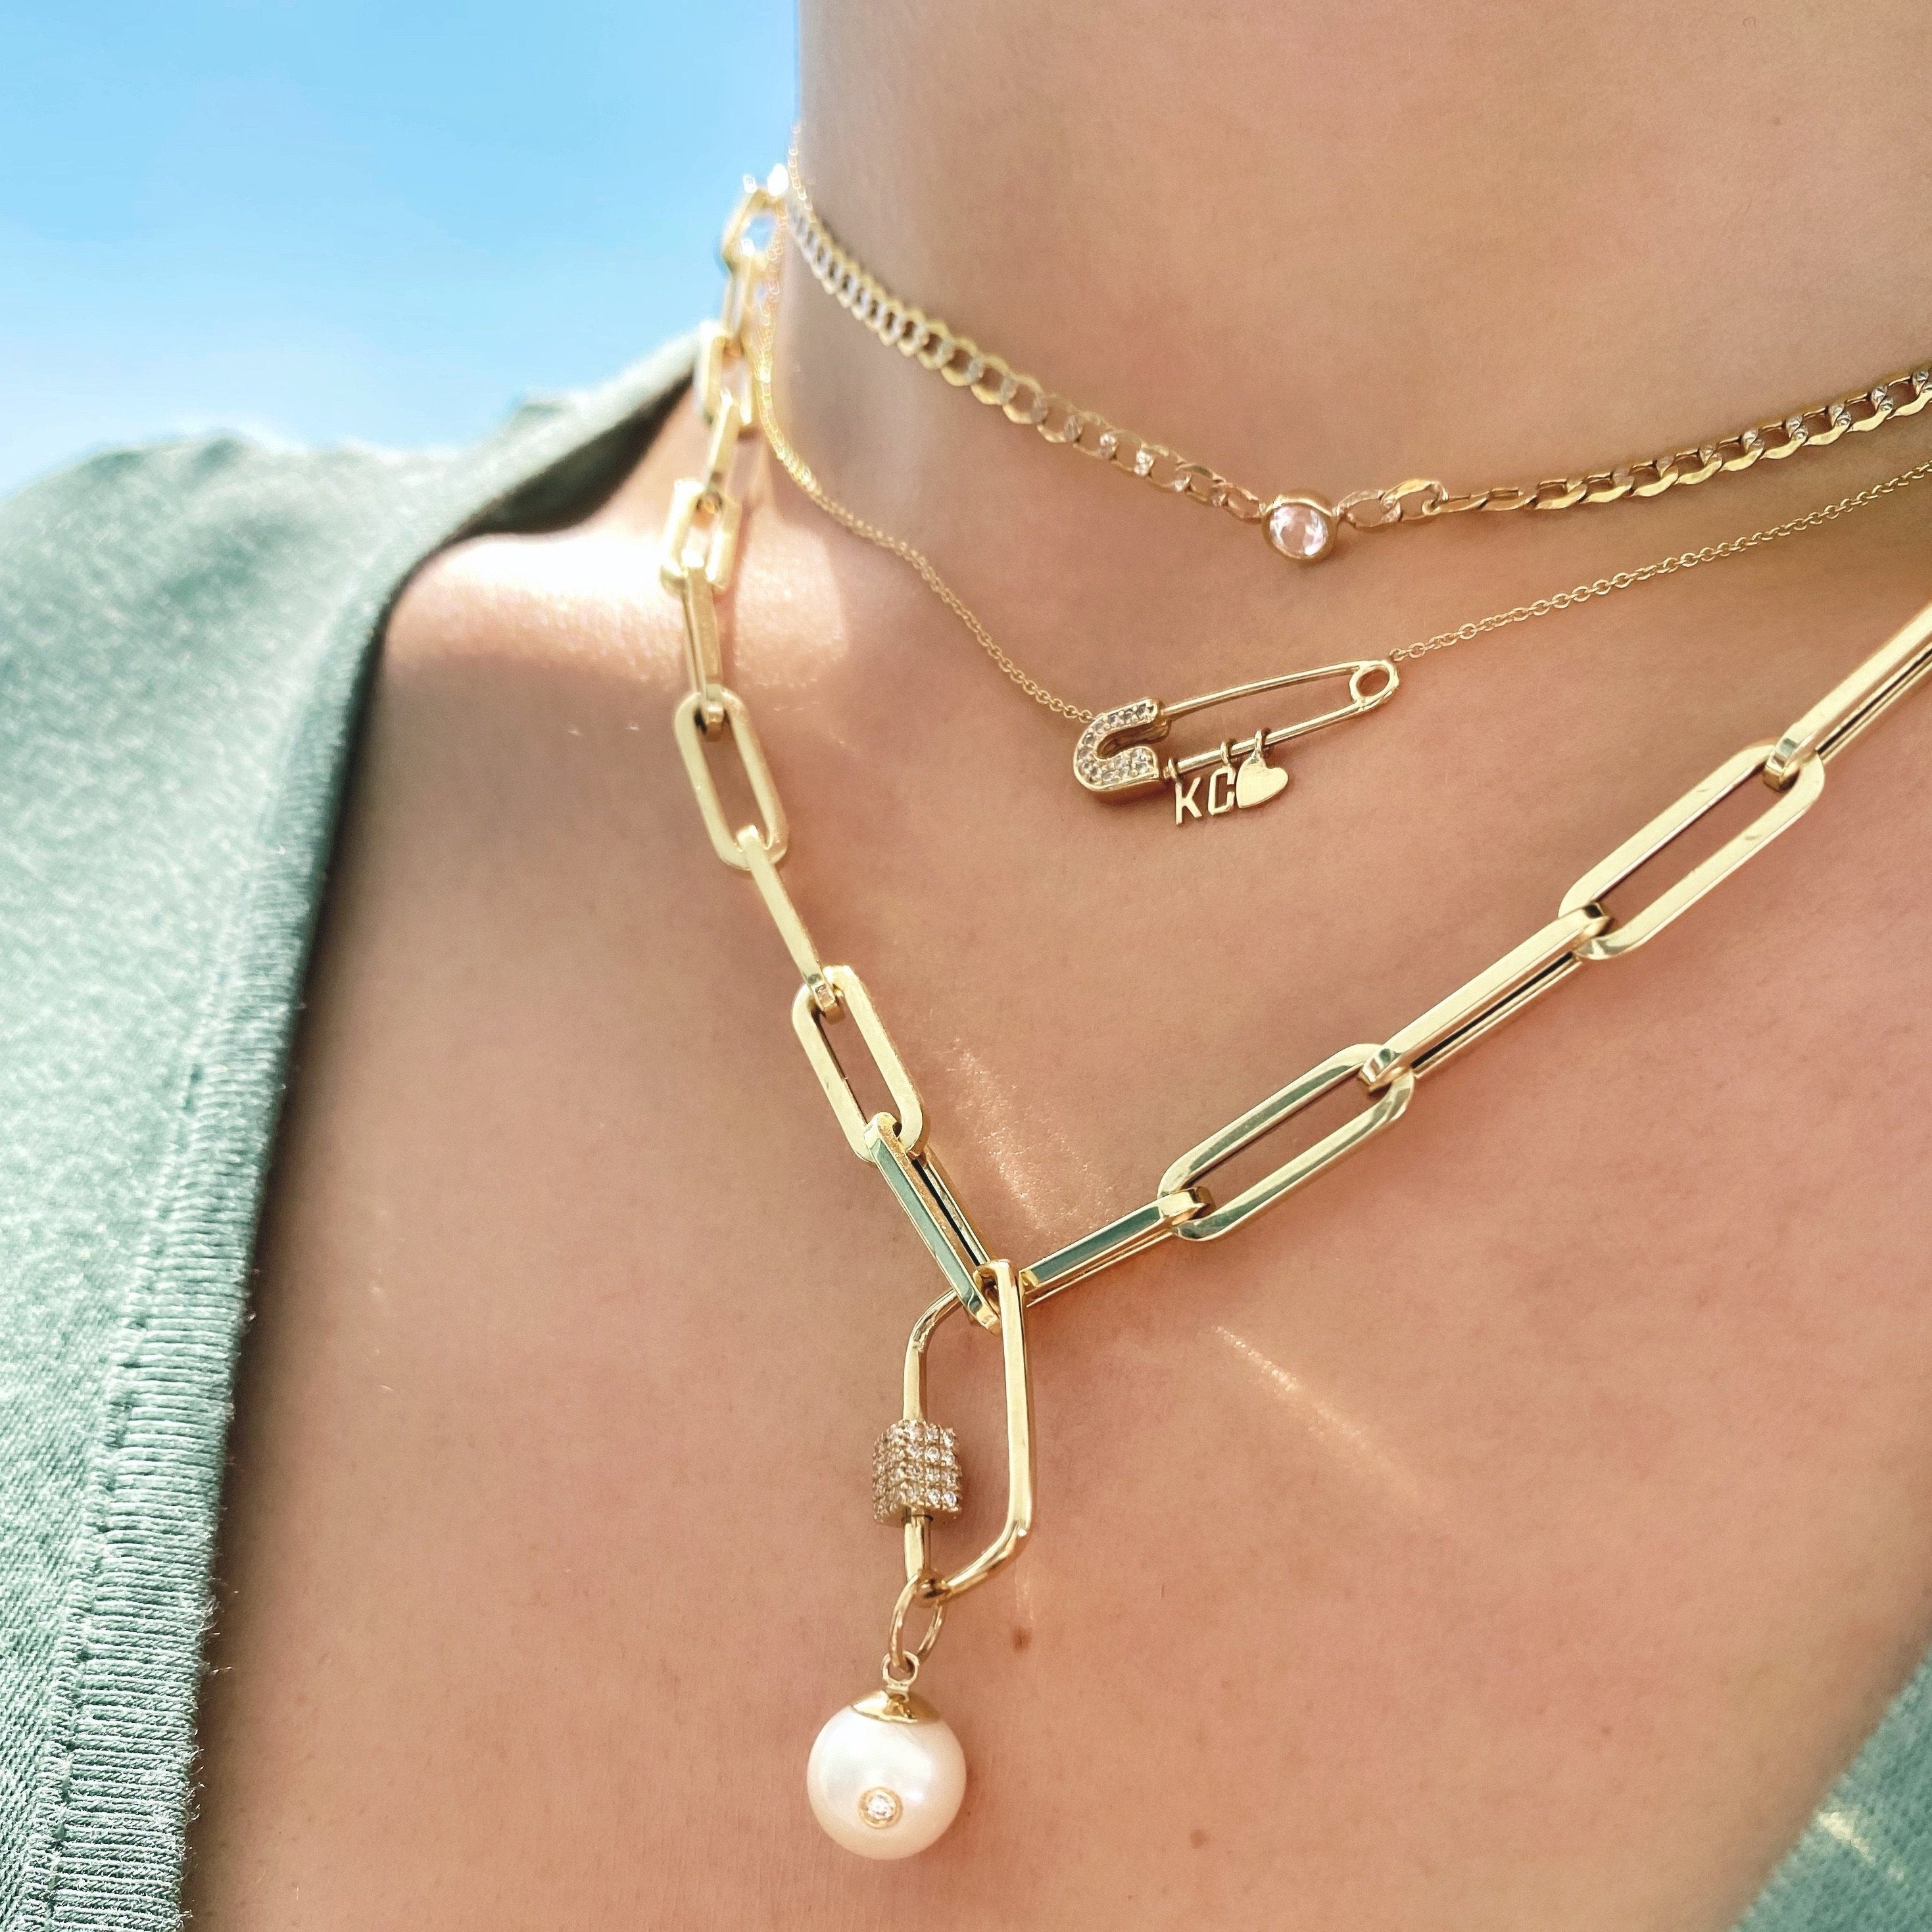 Customize Me Charm Necklace – Shop Sugar Blossom